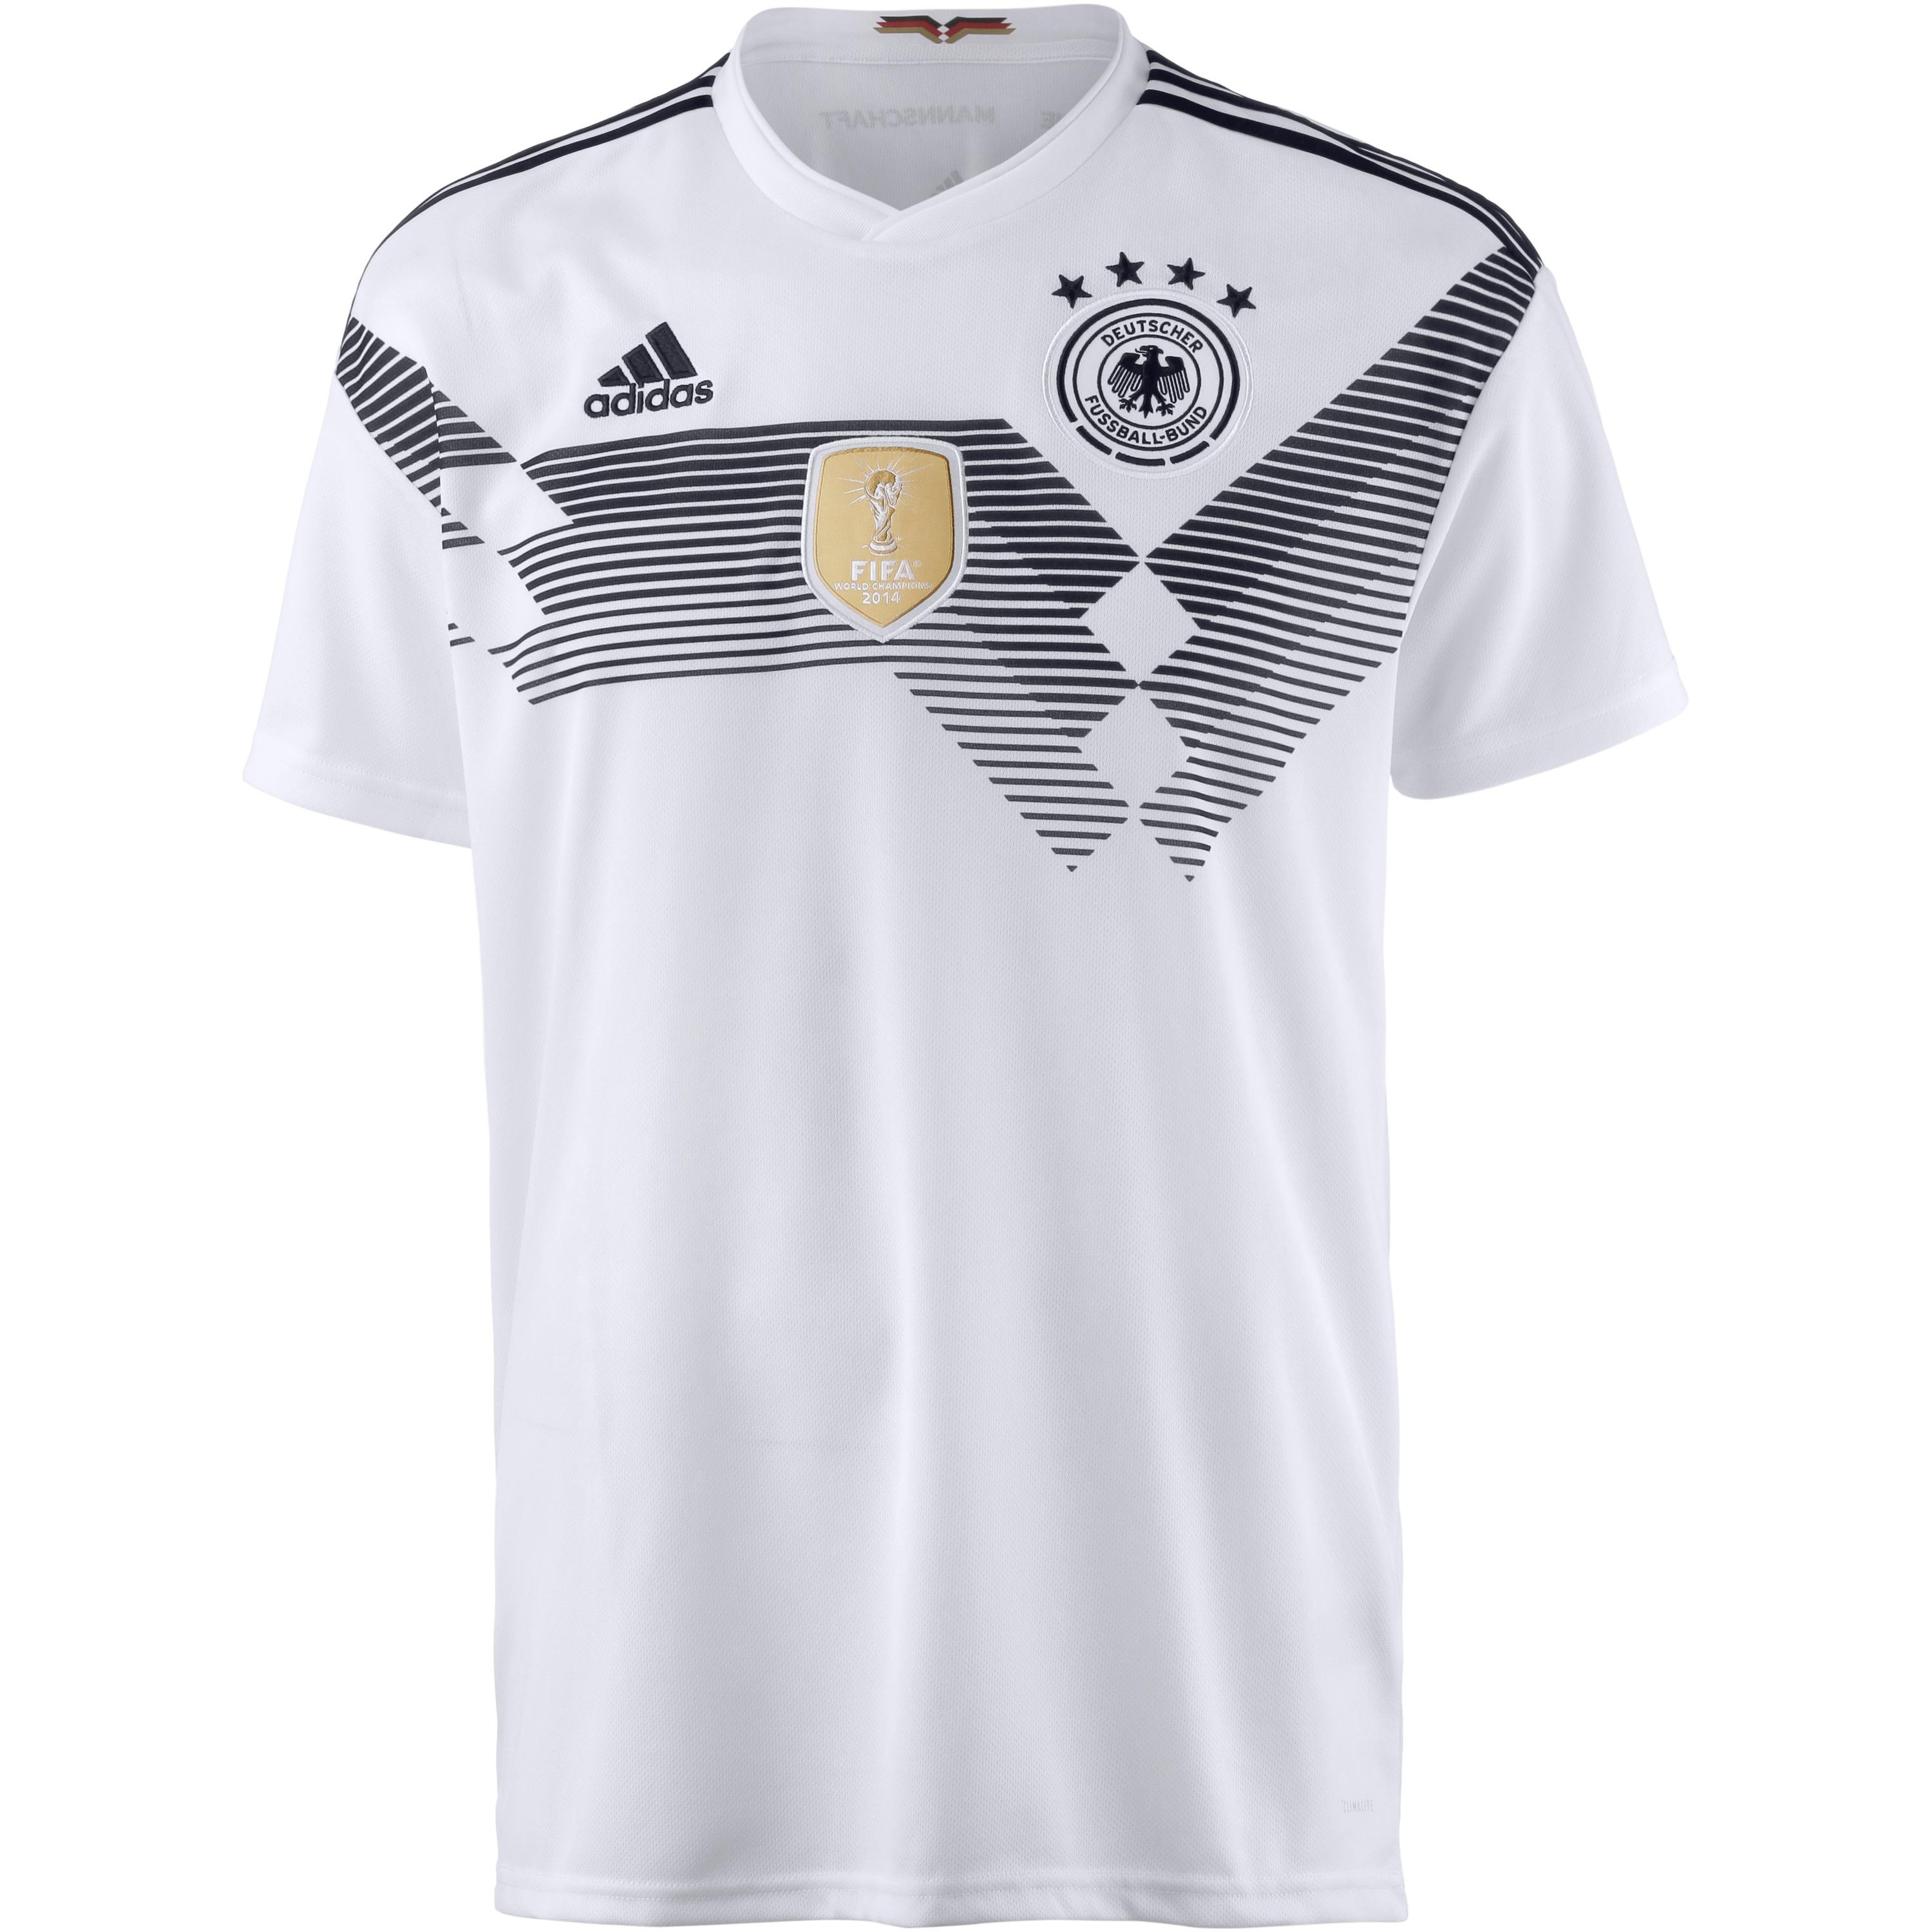 Image of adidas DFB WM 2018 Heim Trikot Herren